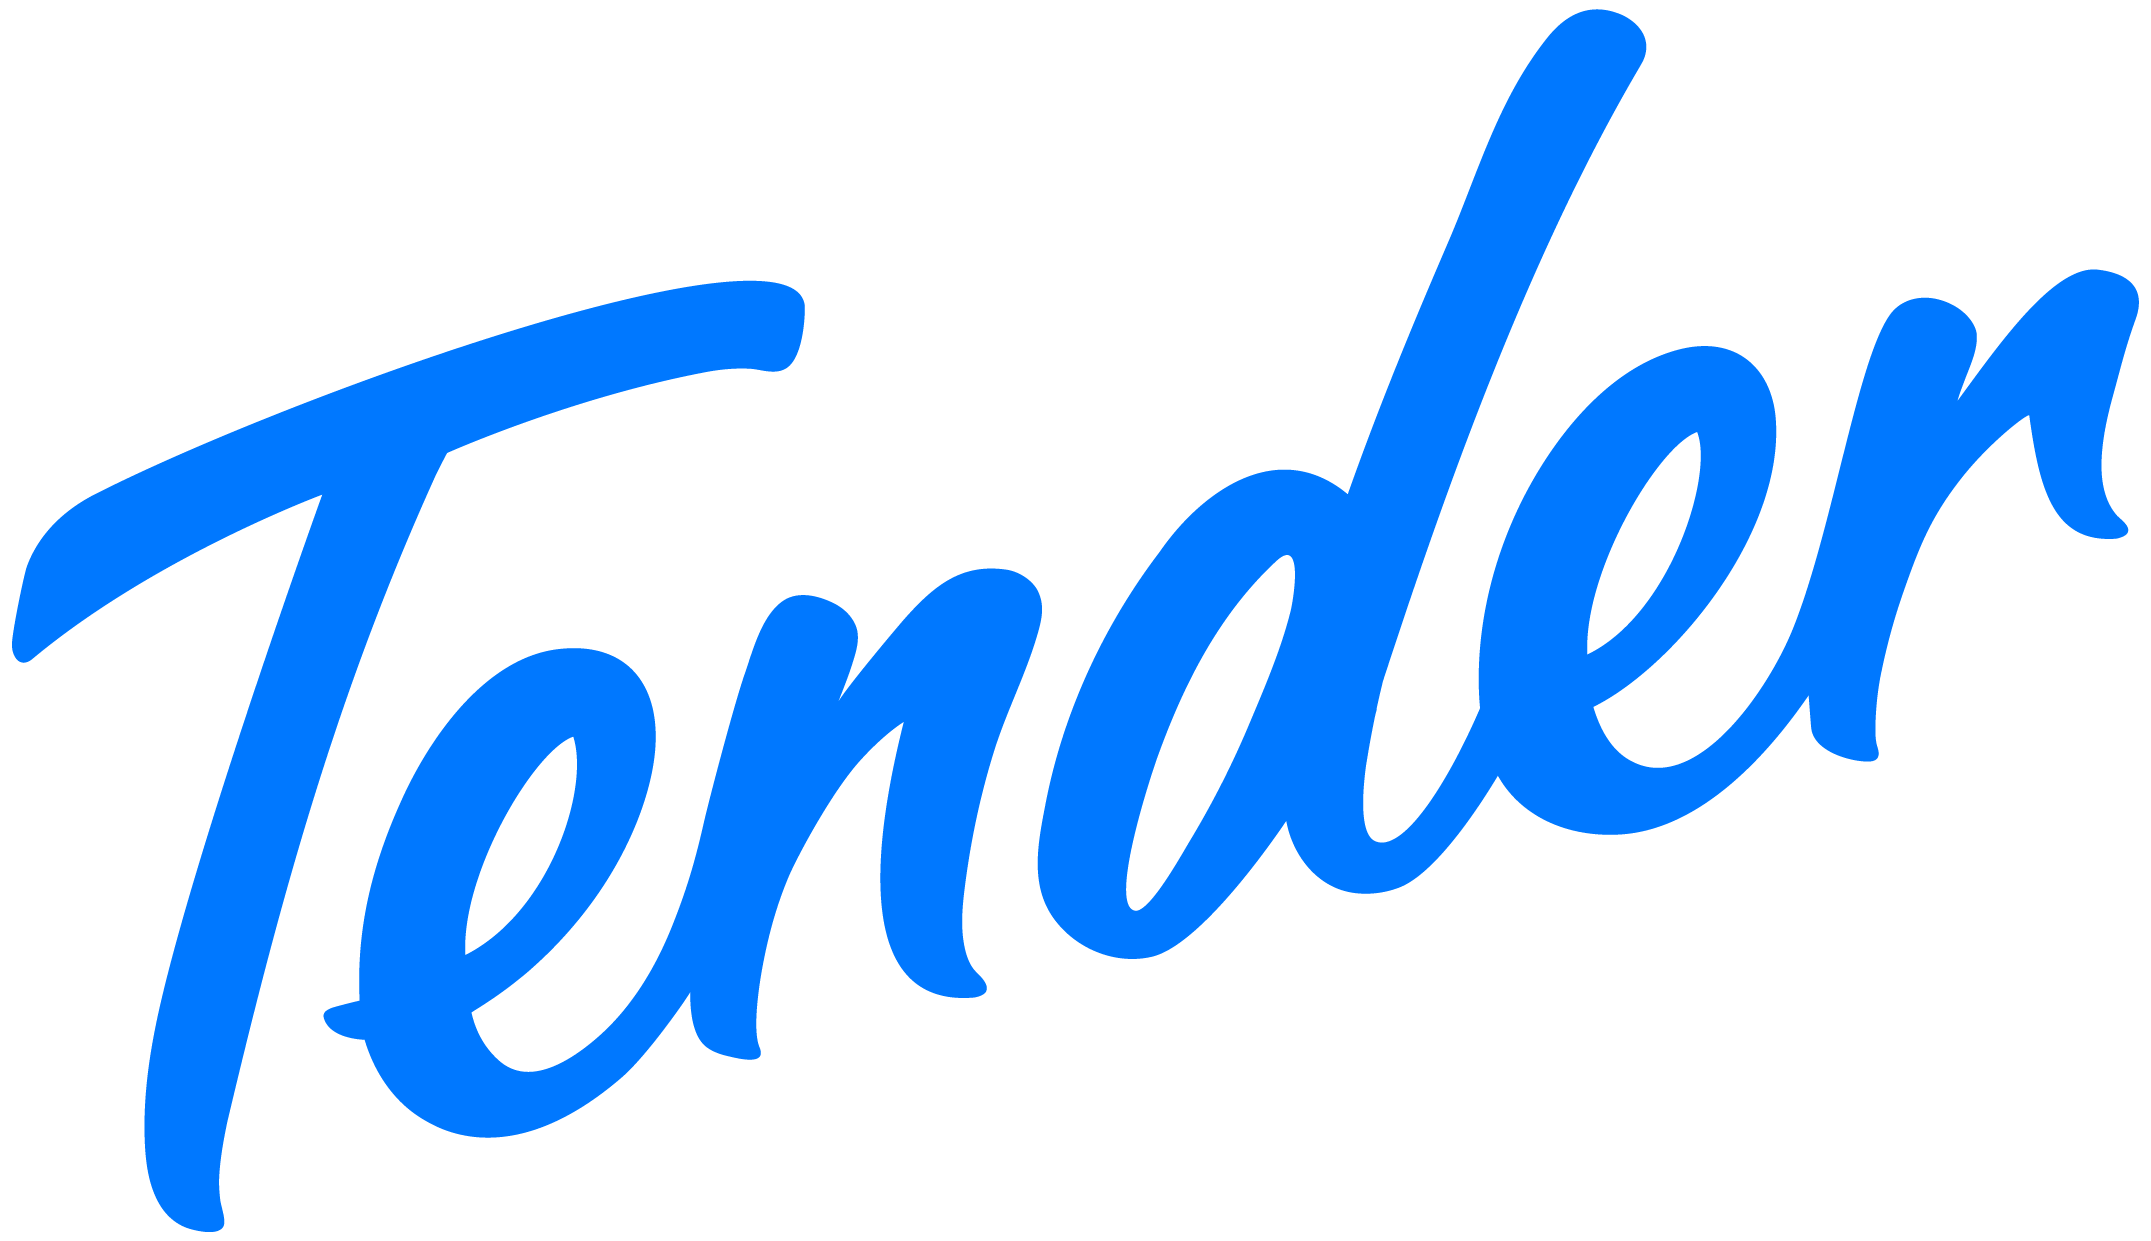 Tender_Logo_Primary Blue.png